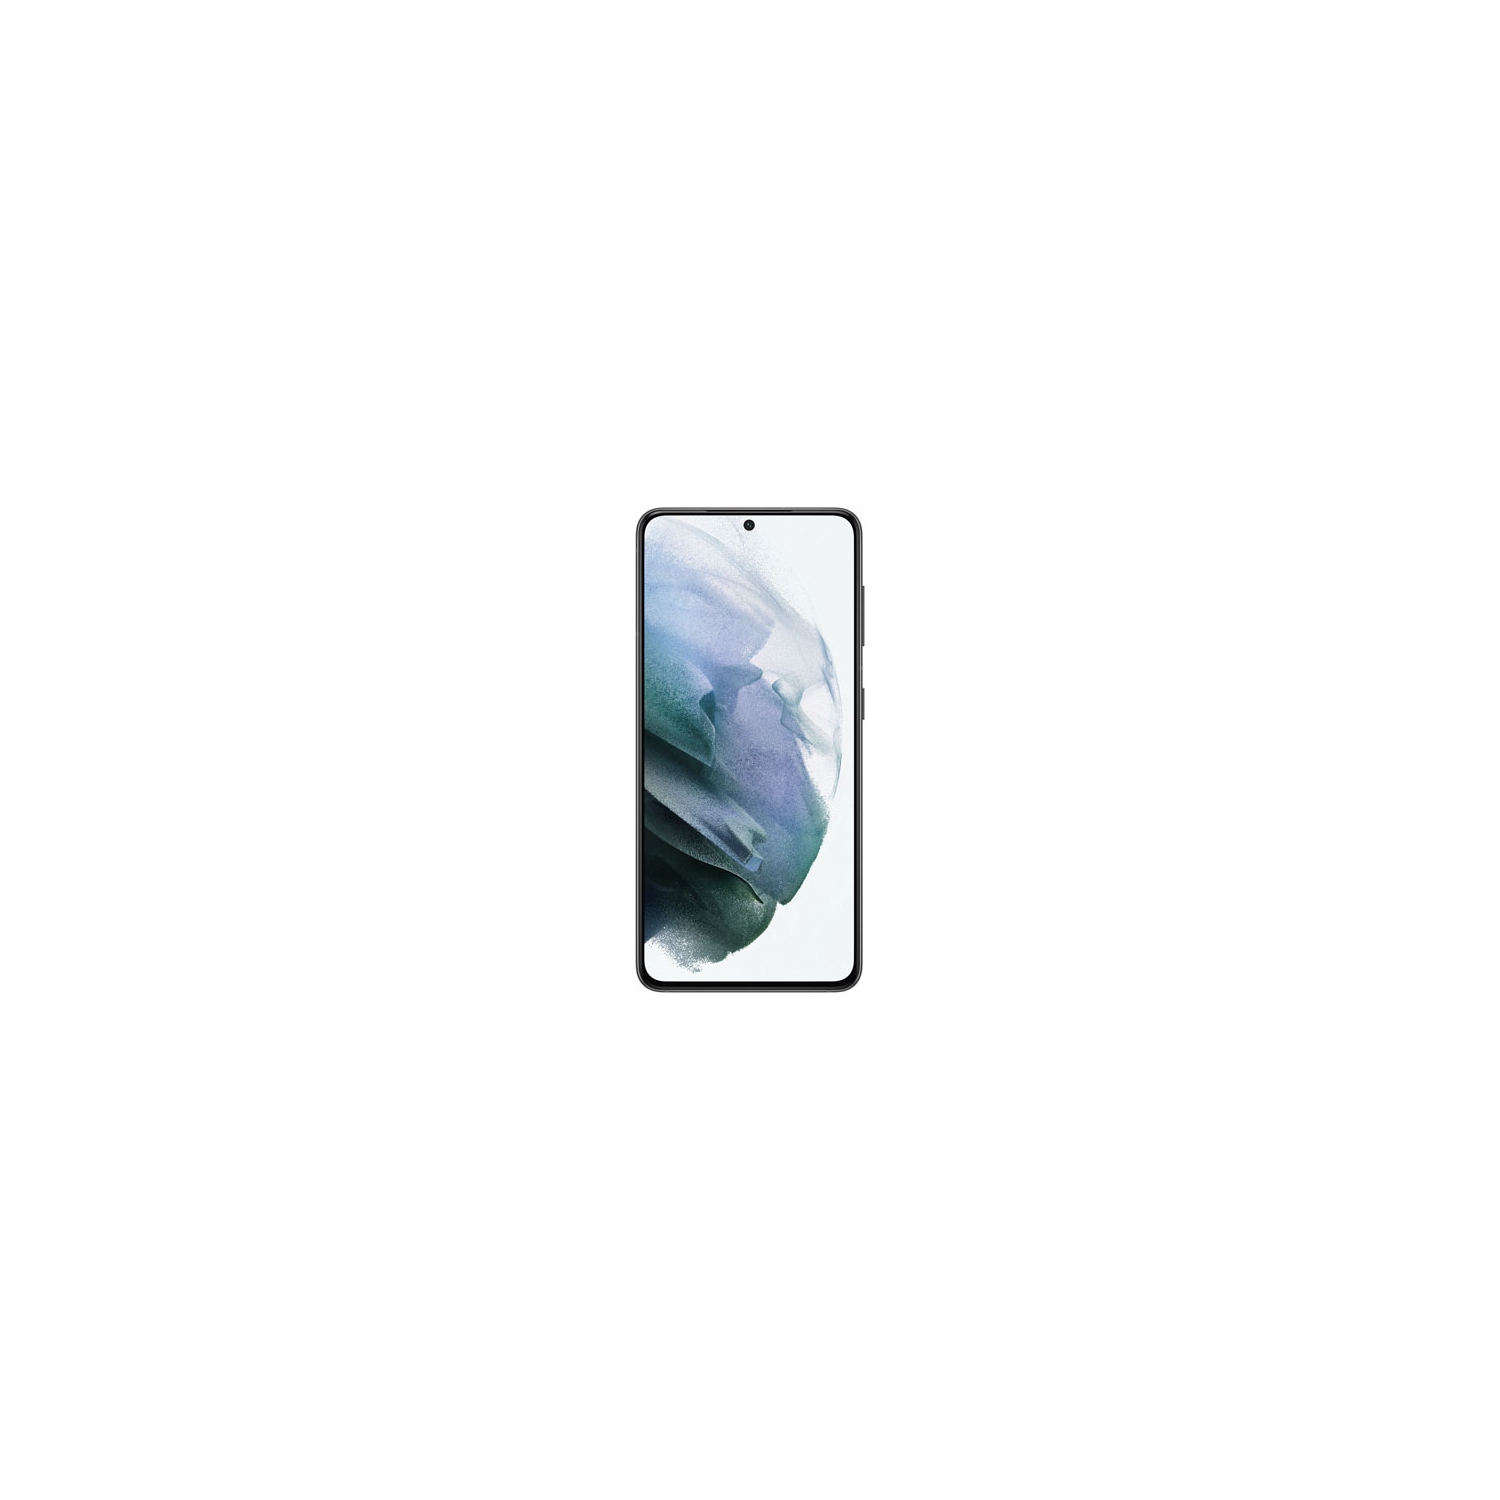 Refurbished (Good) - Samsung Galaxy S21 256GB Smartphone - Phantom Grey - Unlocked